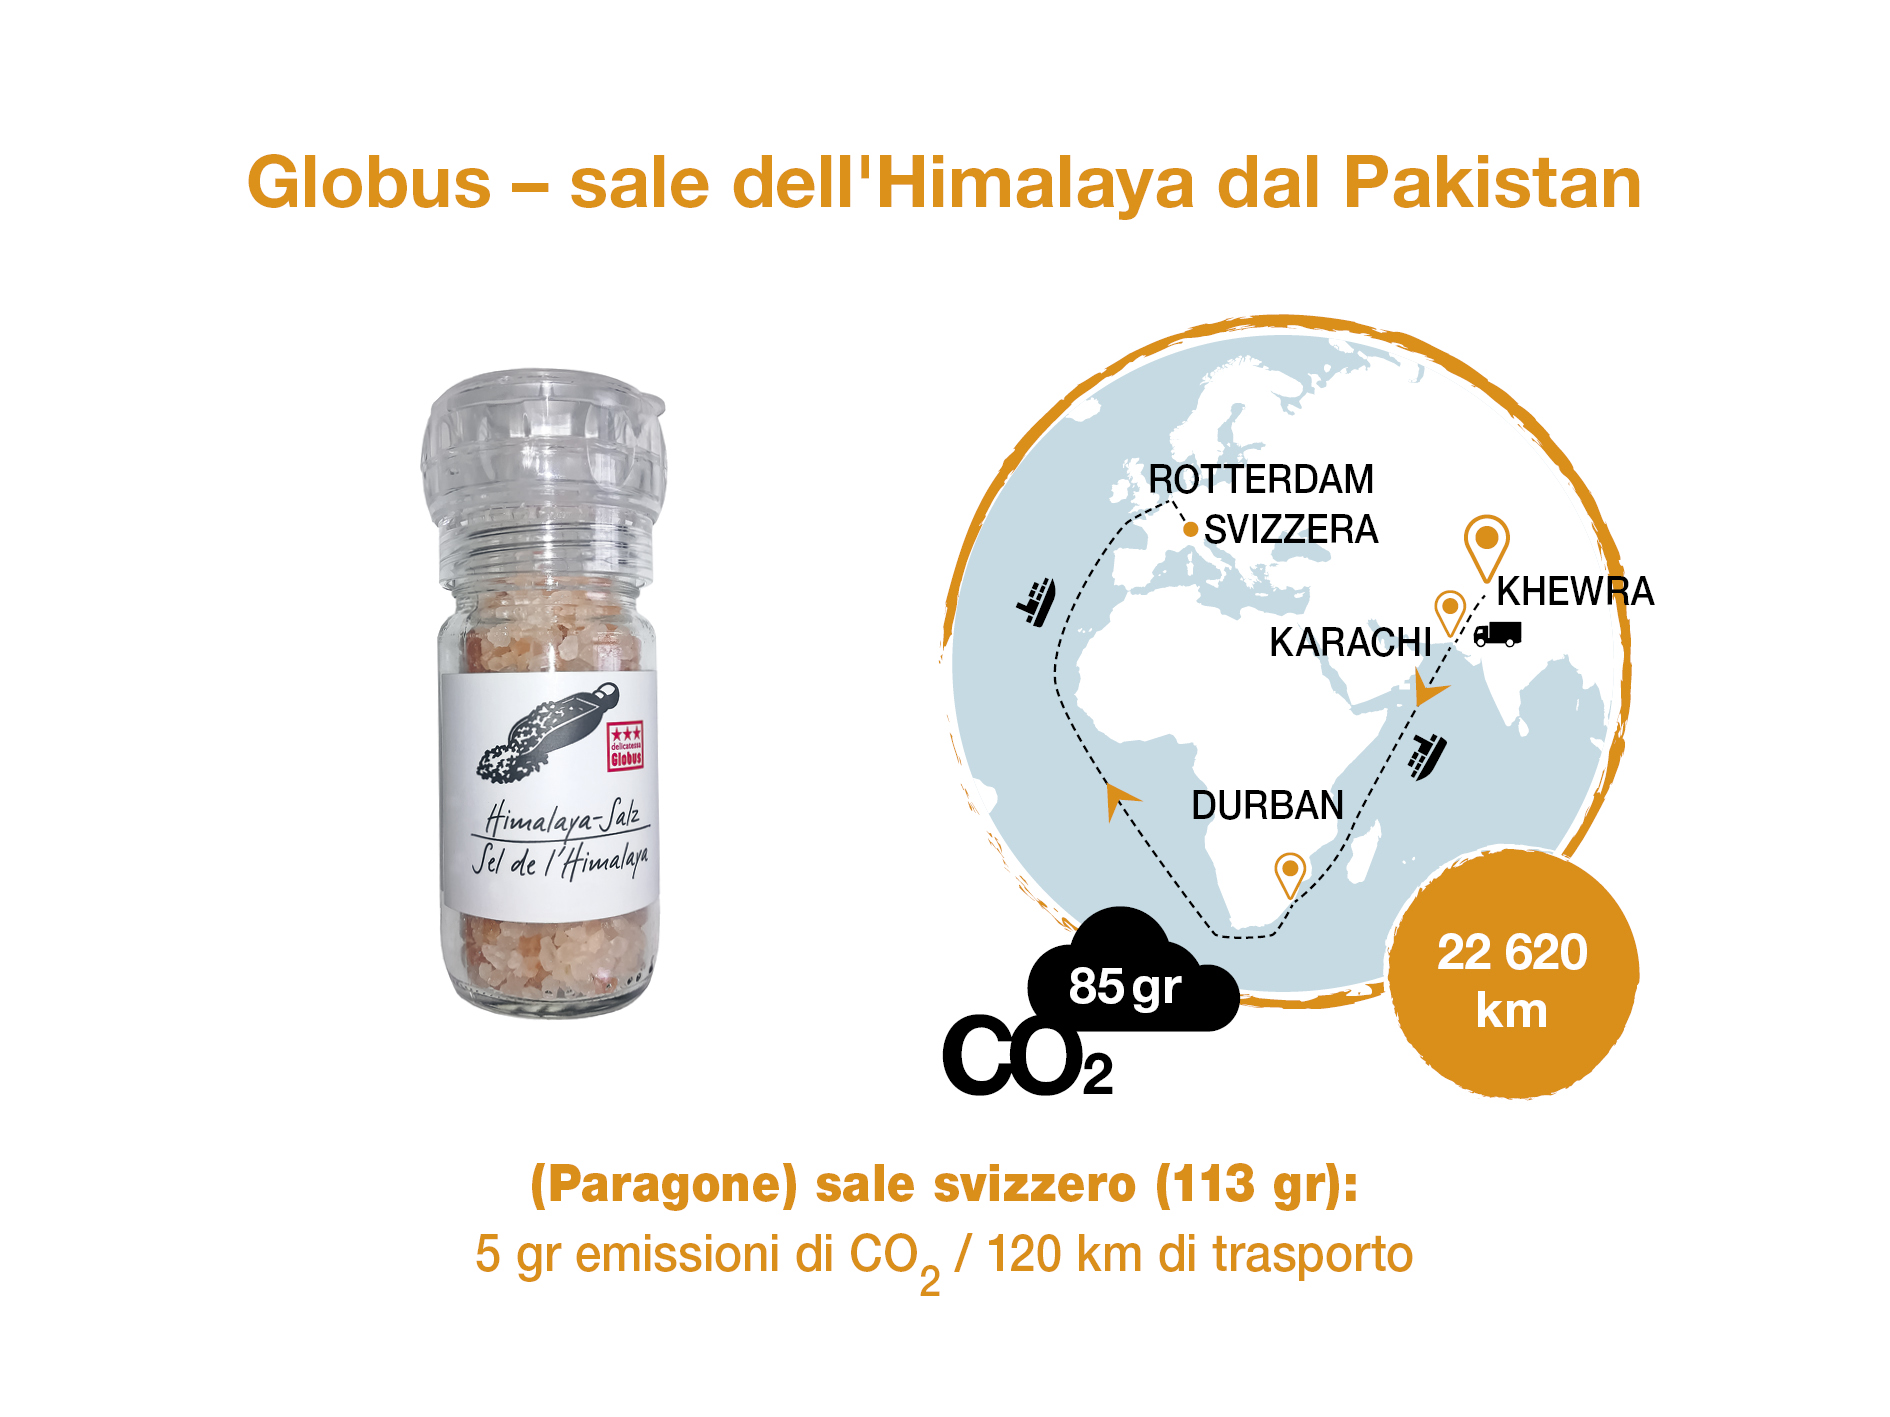 Sale dell’Himalaya dal Pakistan, Globus